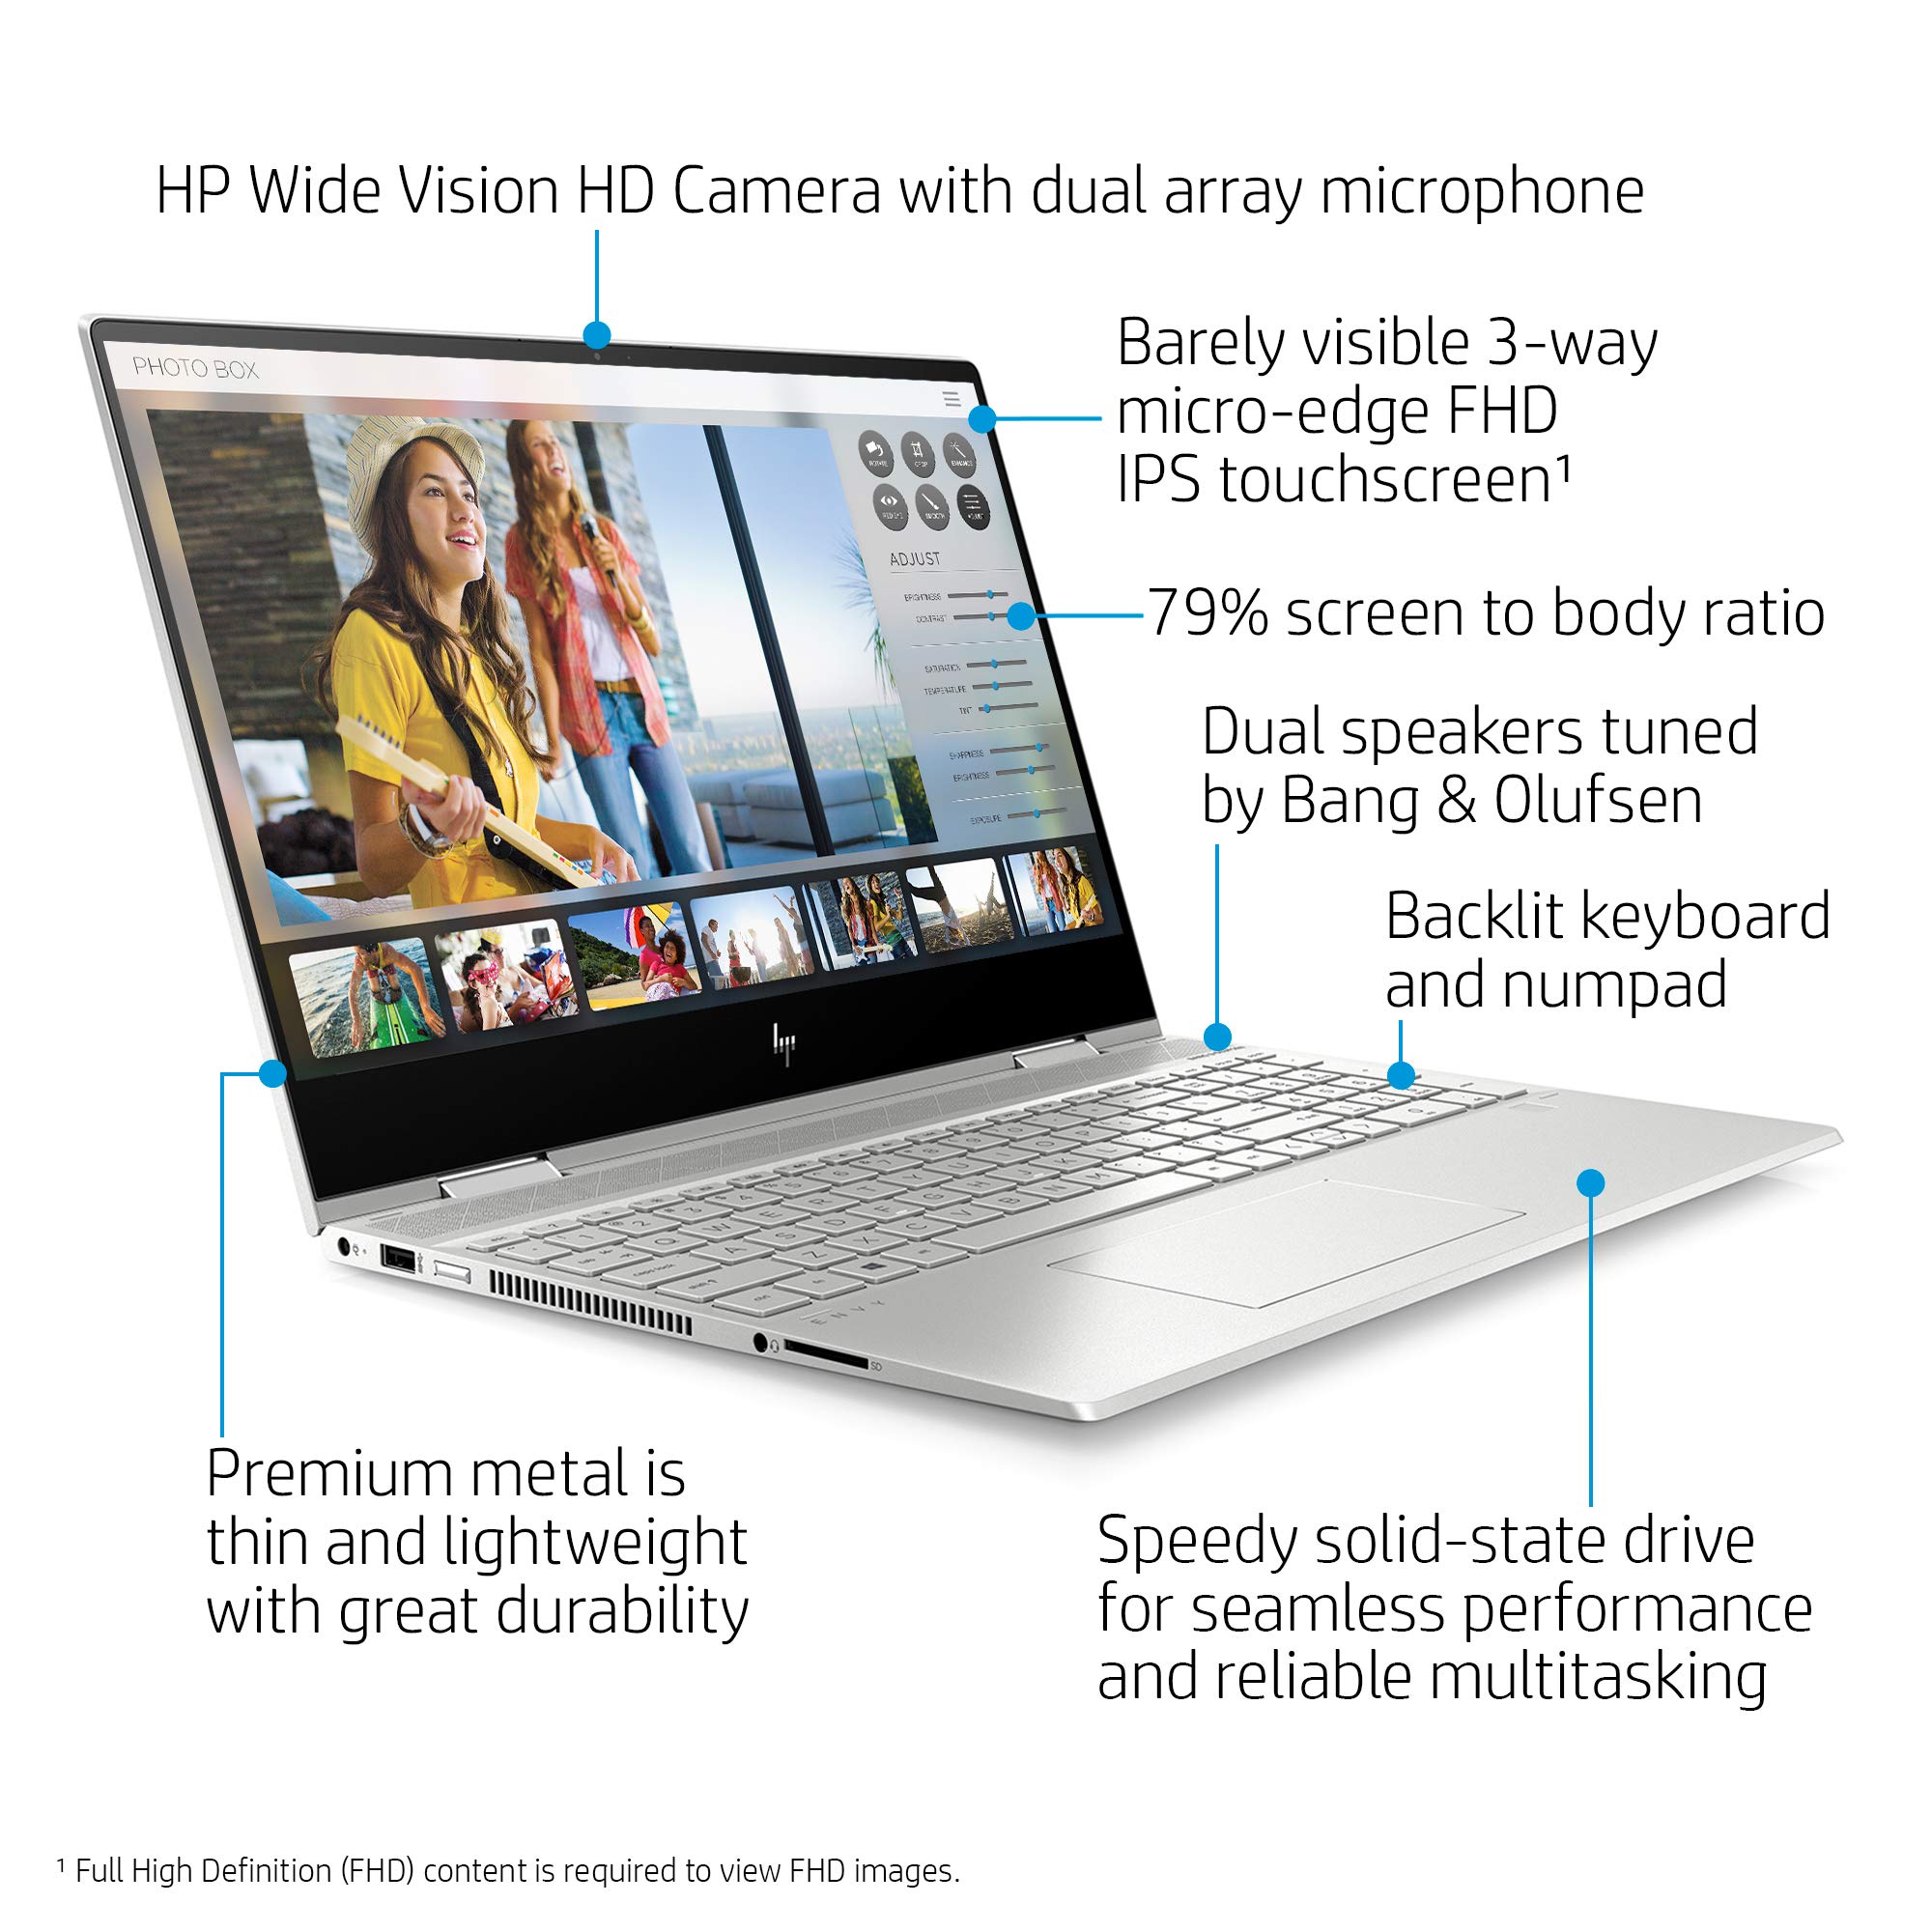 HP 2021 Flagship Envy x360 Convertible 2 in 1 Laptop 15.6inch FHD IPS Touchscreen Intel Quad-Core i5-10210U(Beats i7-8550U) 16GB DDR4 512GB SSD Backlit Fingerprint Win 10 + Pen Natural silver RAM I